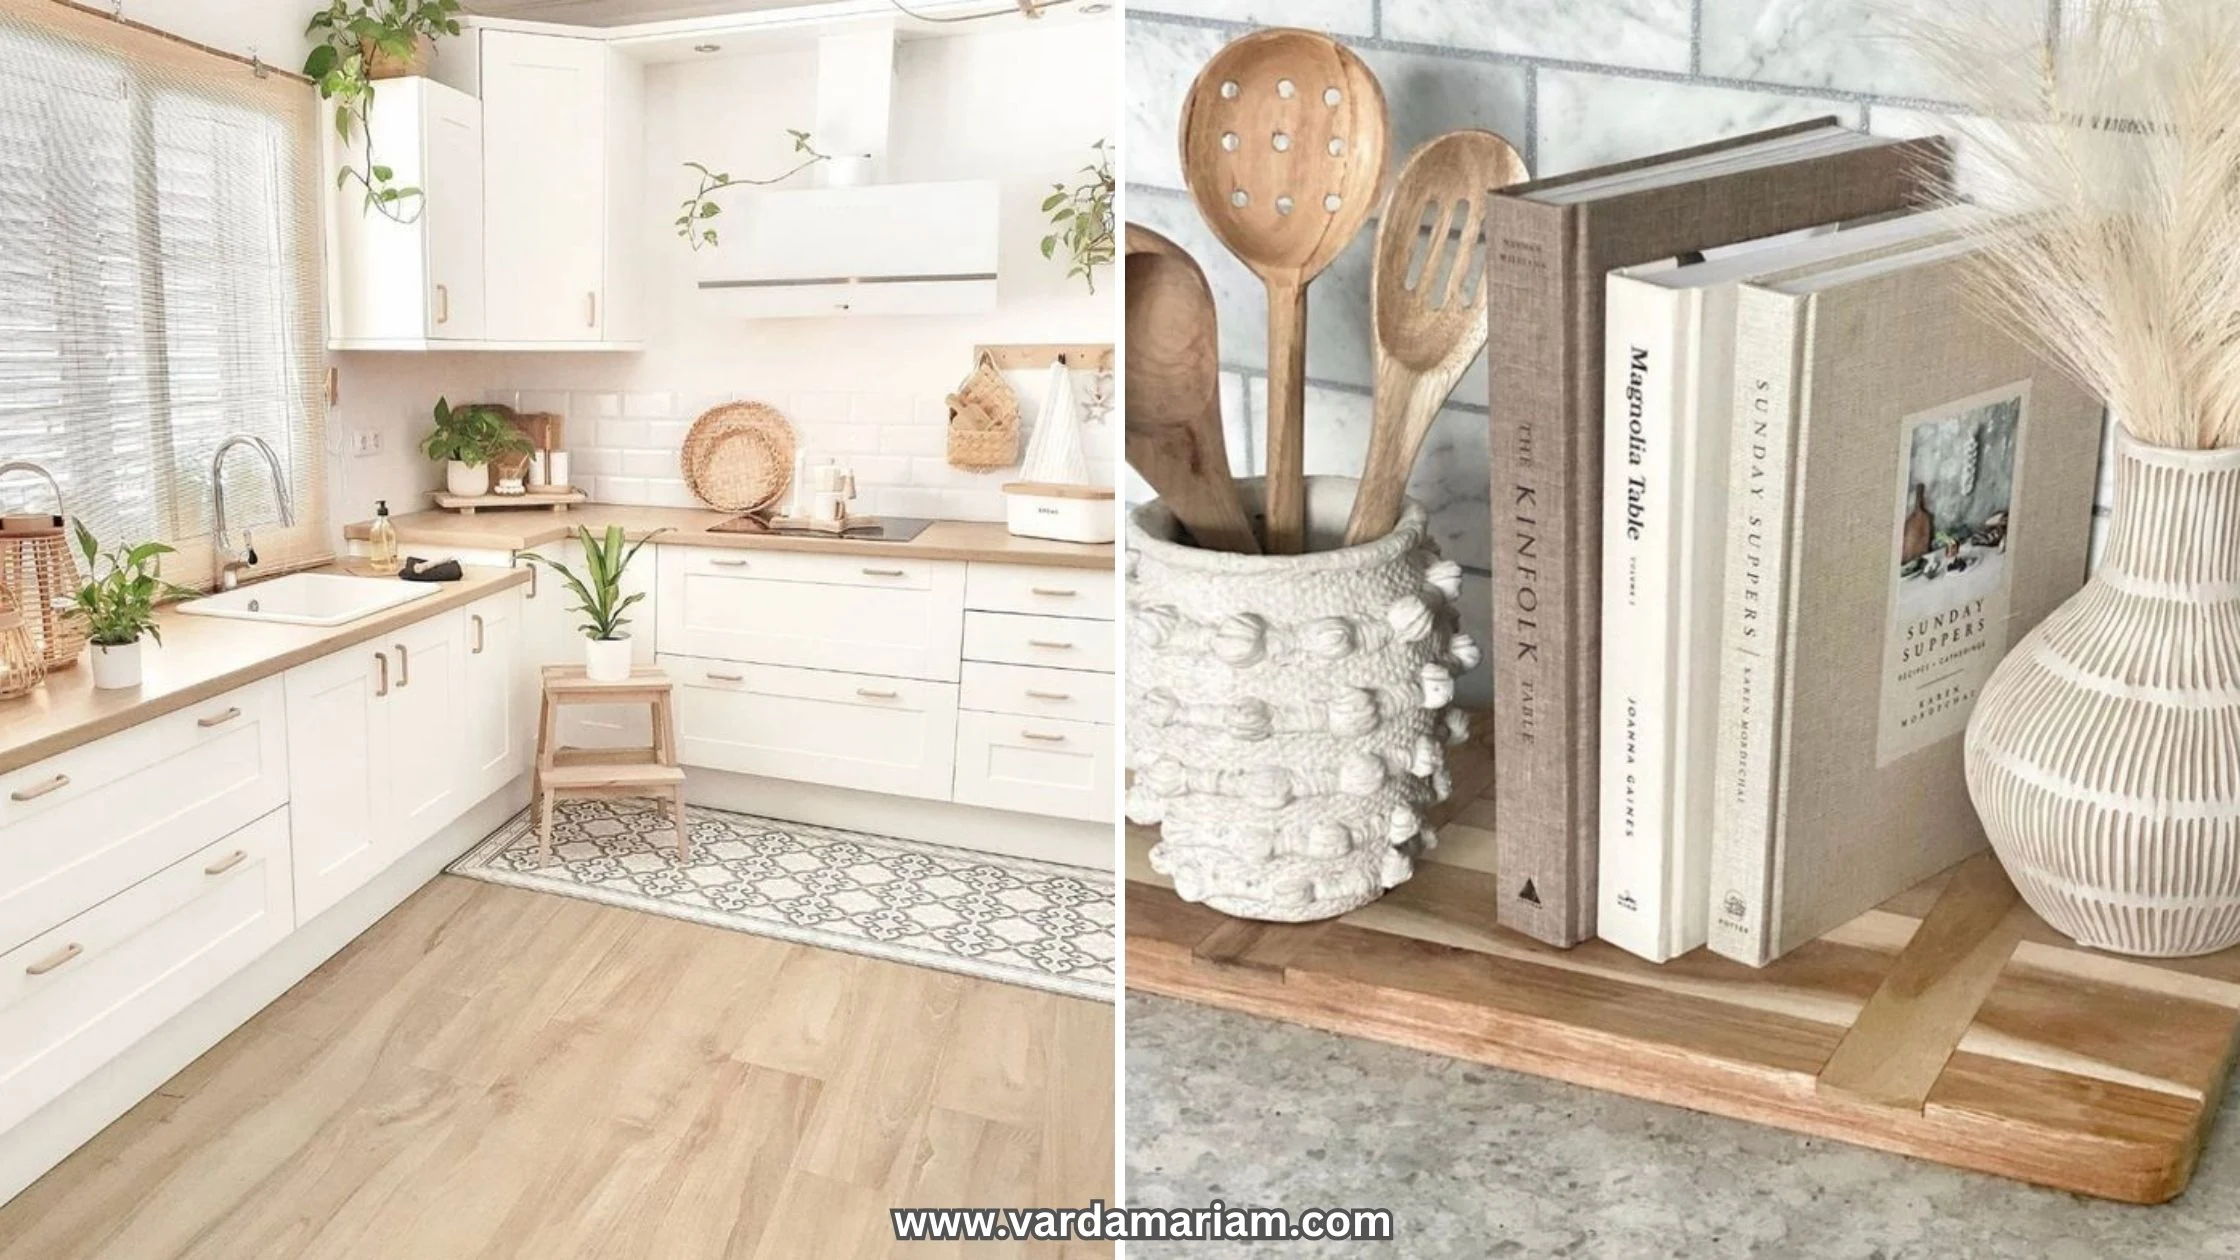 natural wood cabinets kitchen